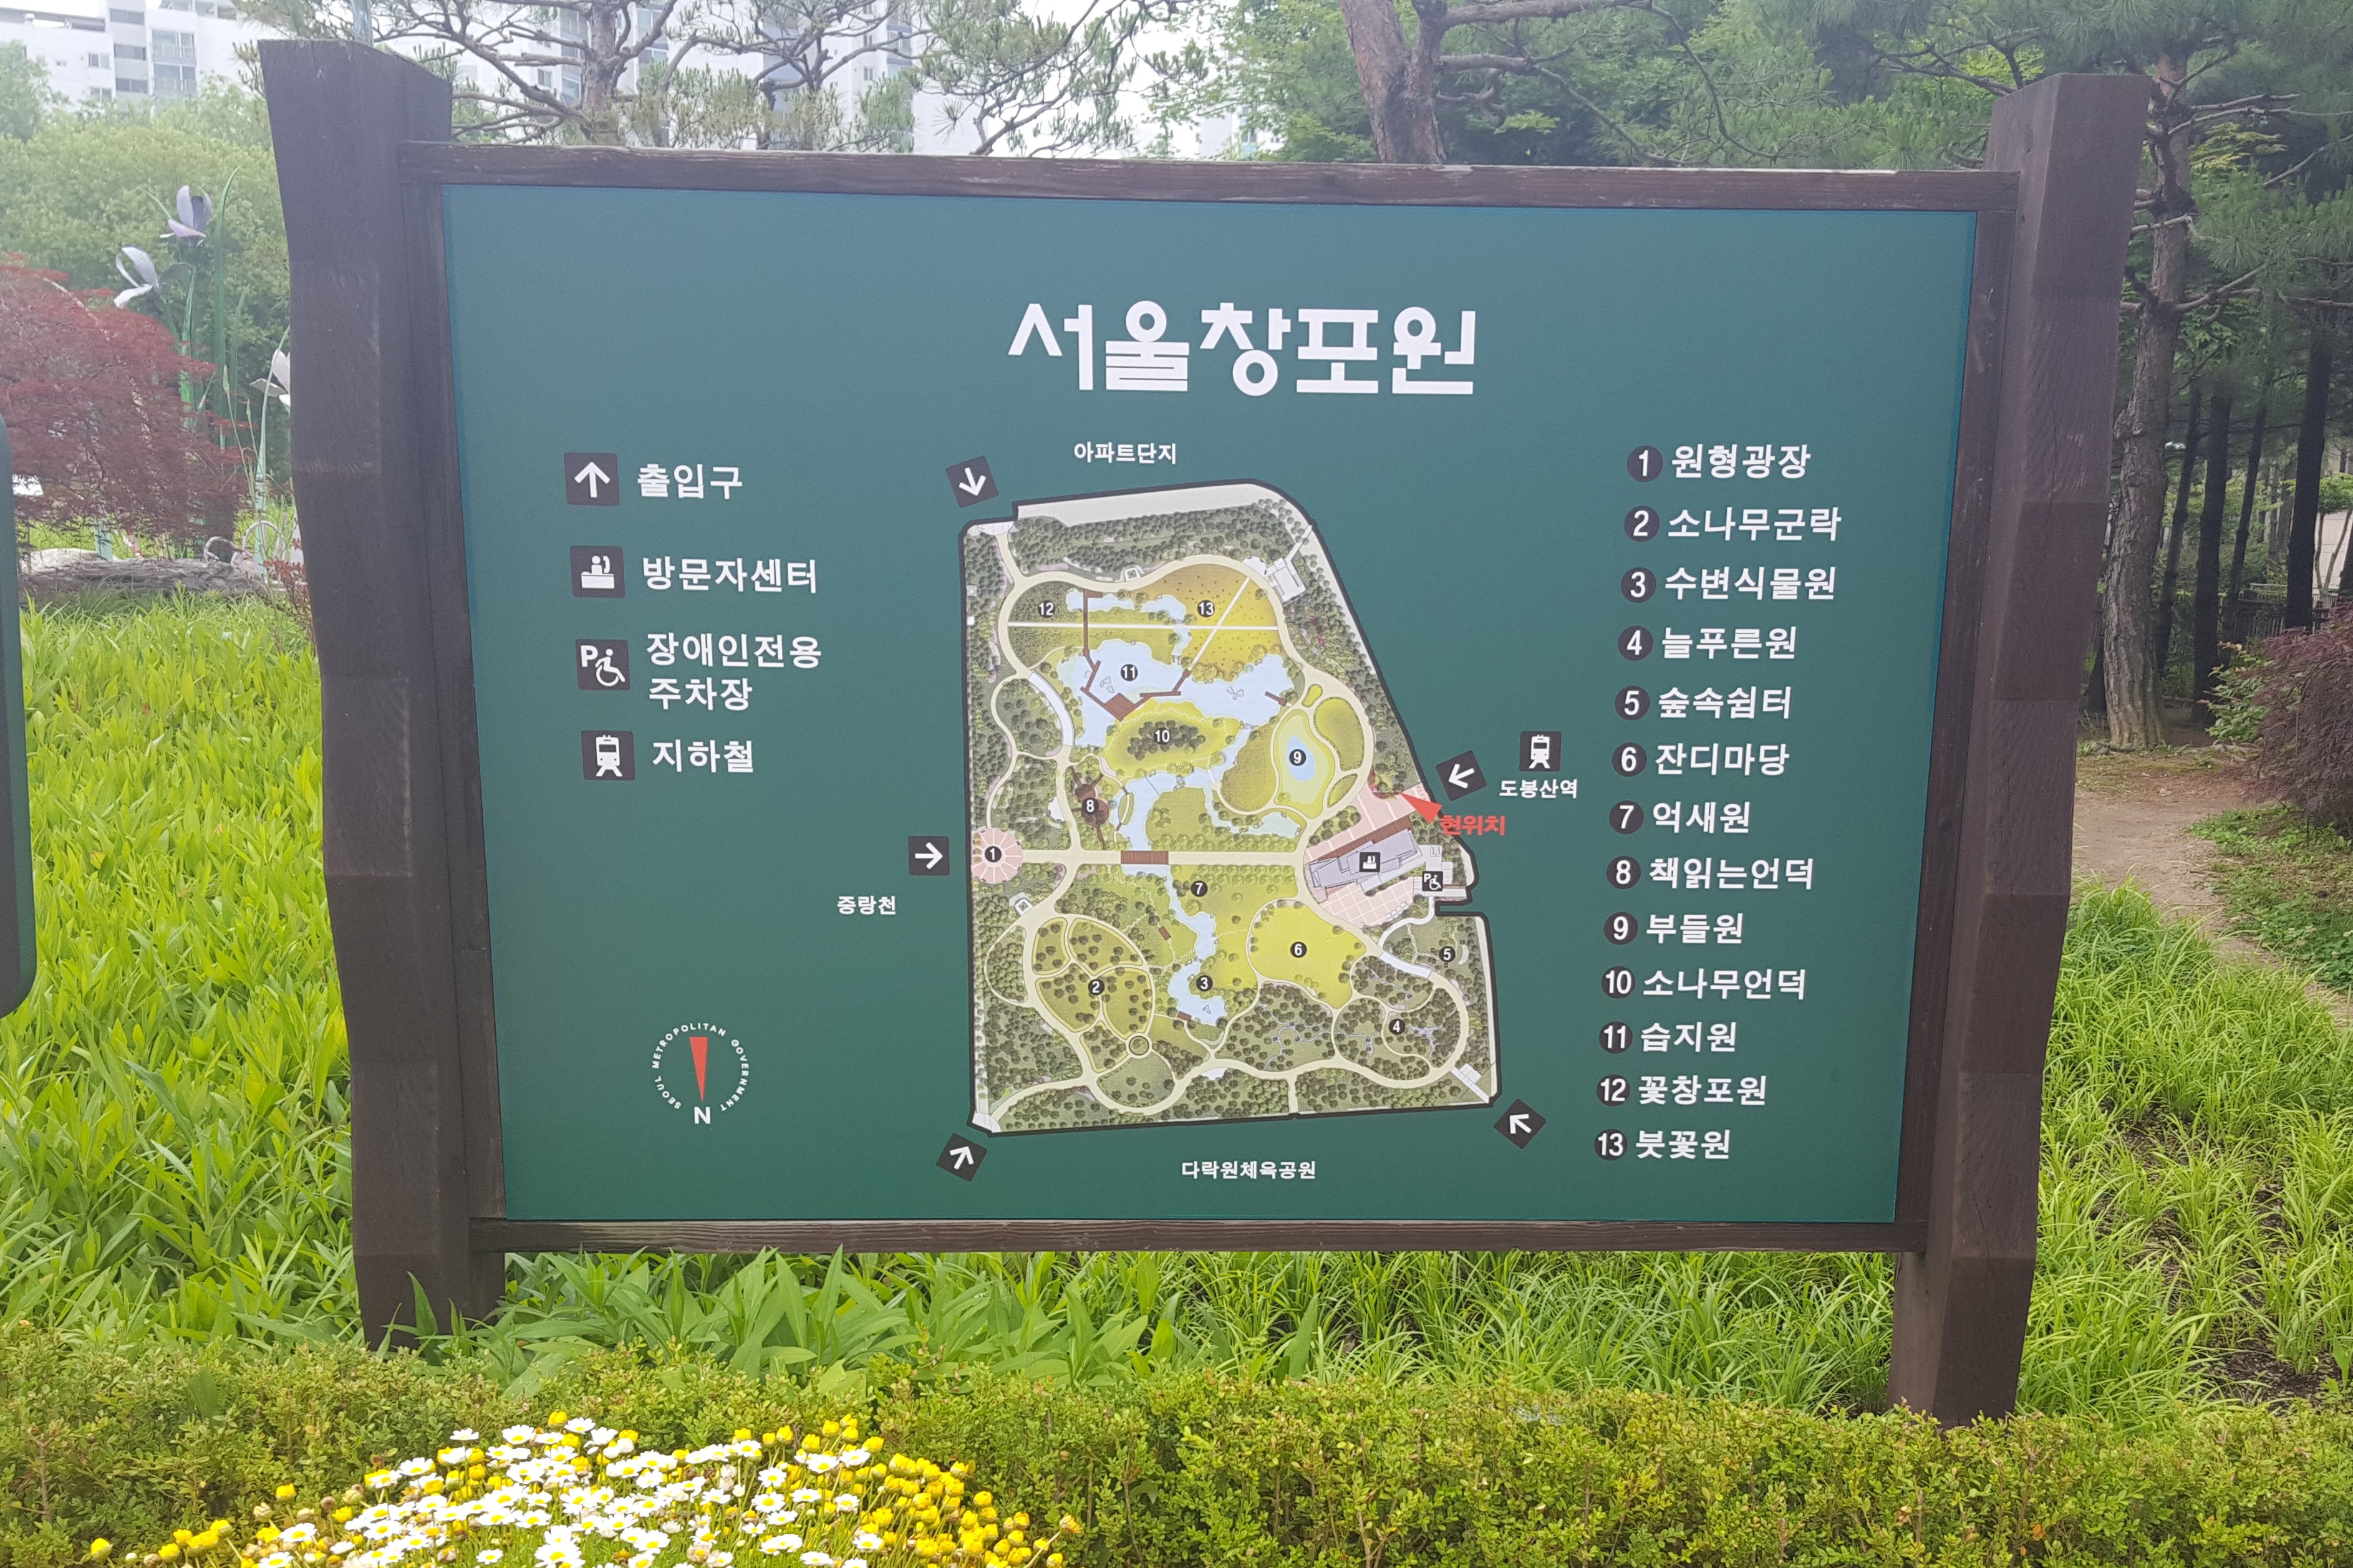 Korean Braille guide map and information desk0 : Korean braille description board installed at the entrance of Seoul Iris Garden